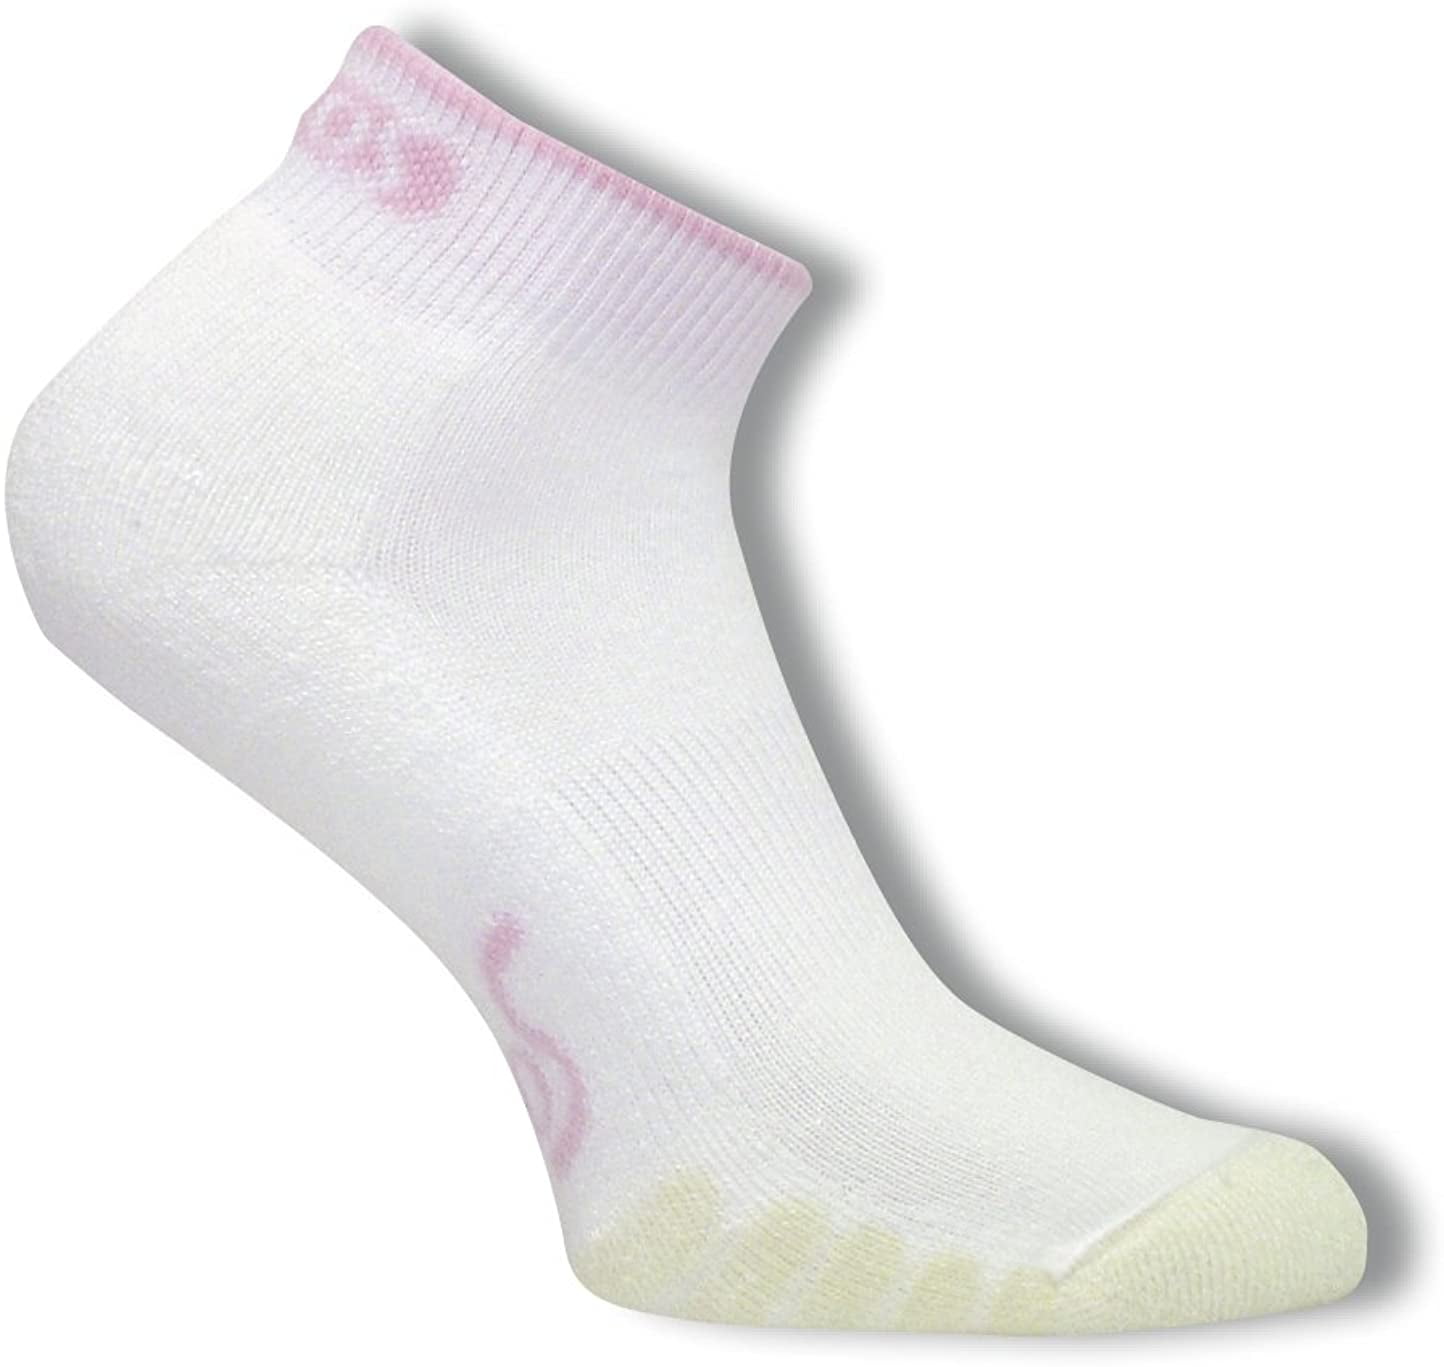 Extra Smooth Toe Seams Snug Fit & Feel Padded Arch Support Eurosocks Sport Specific Athletic Socks 3812